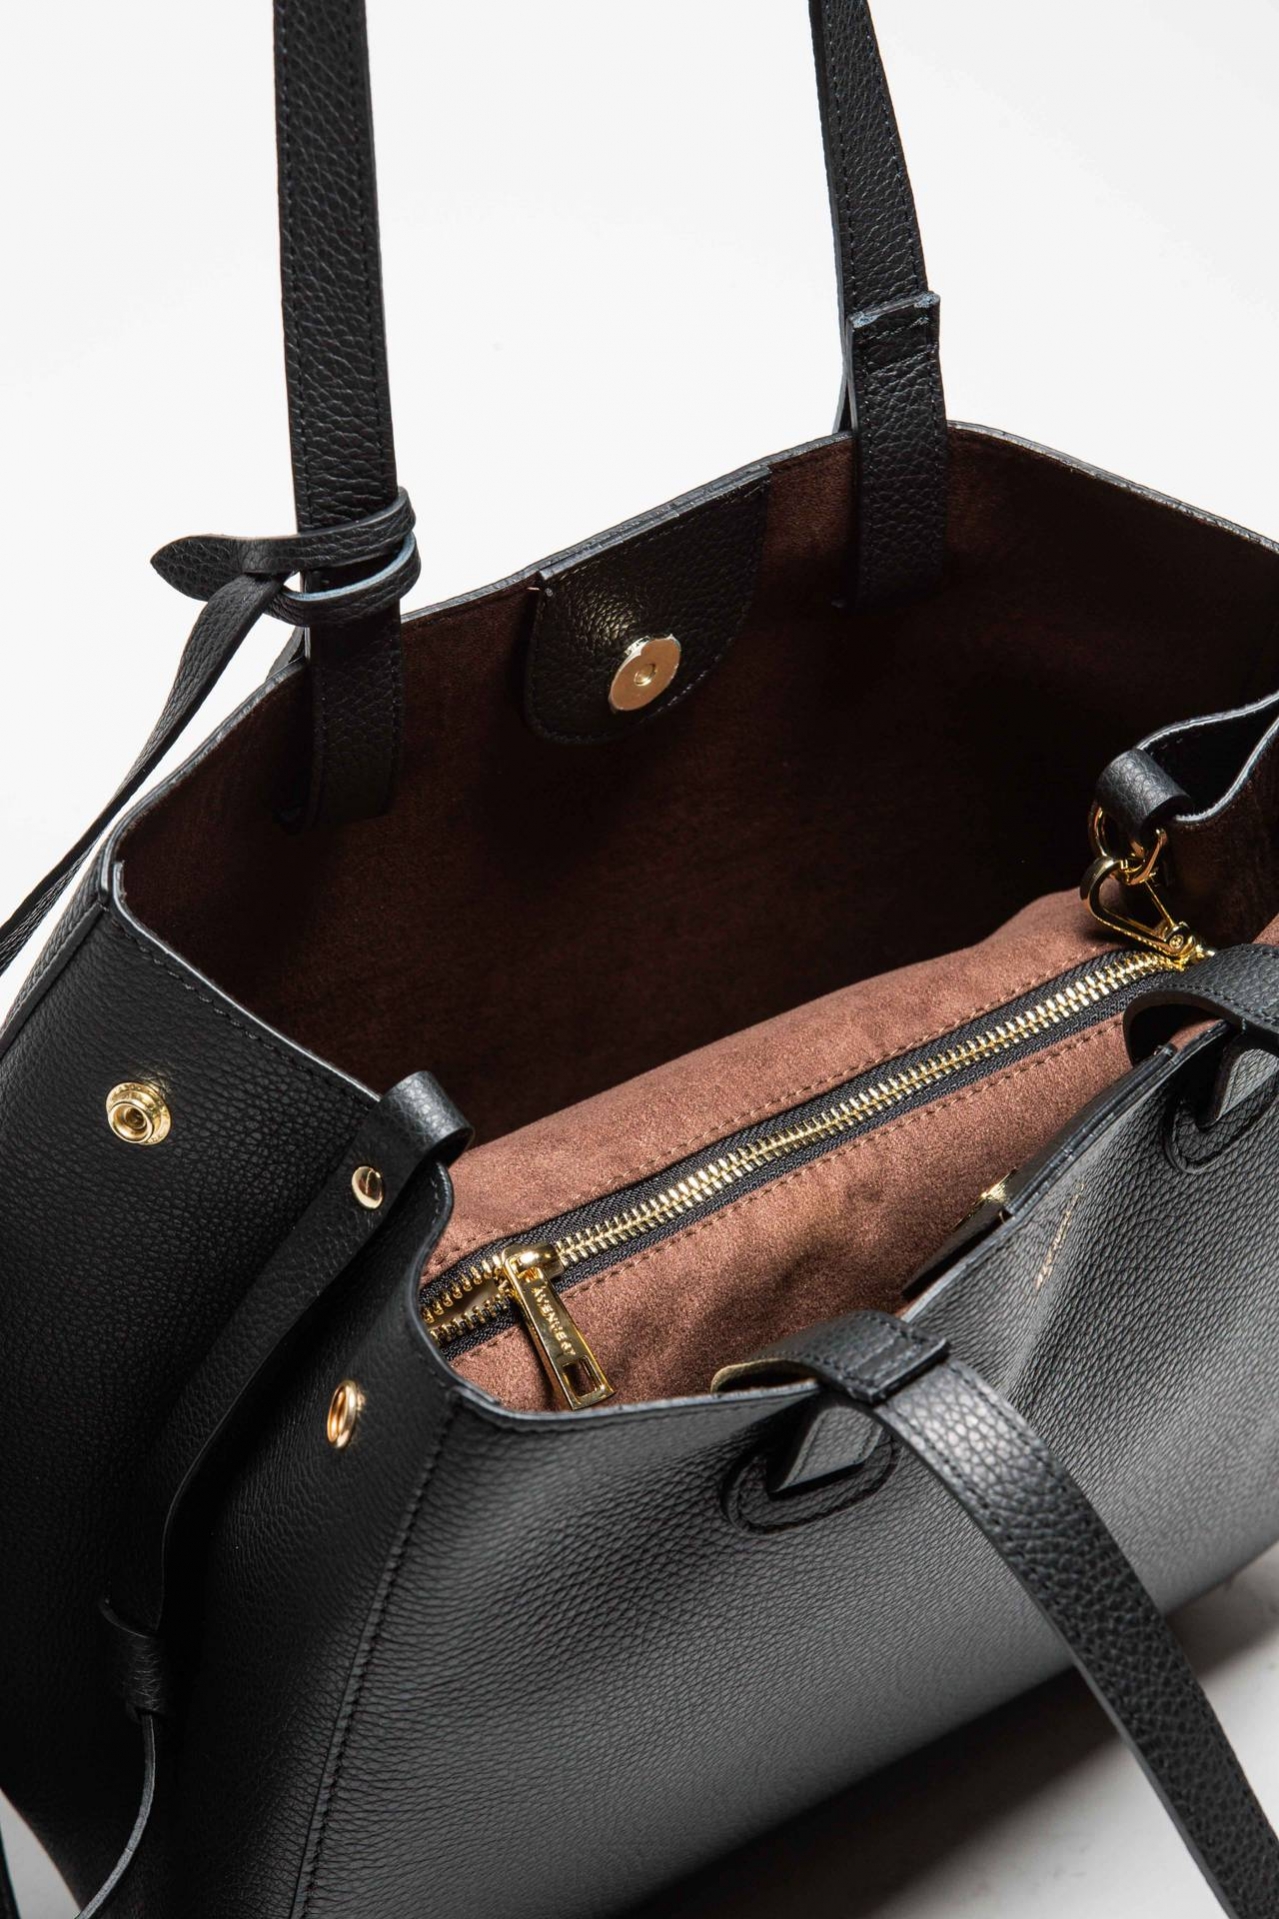 Black leather VICTORIA bag